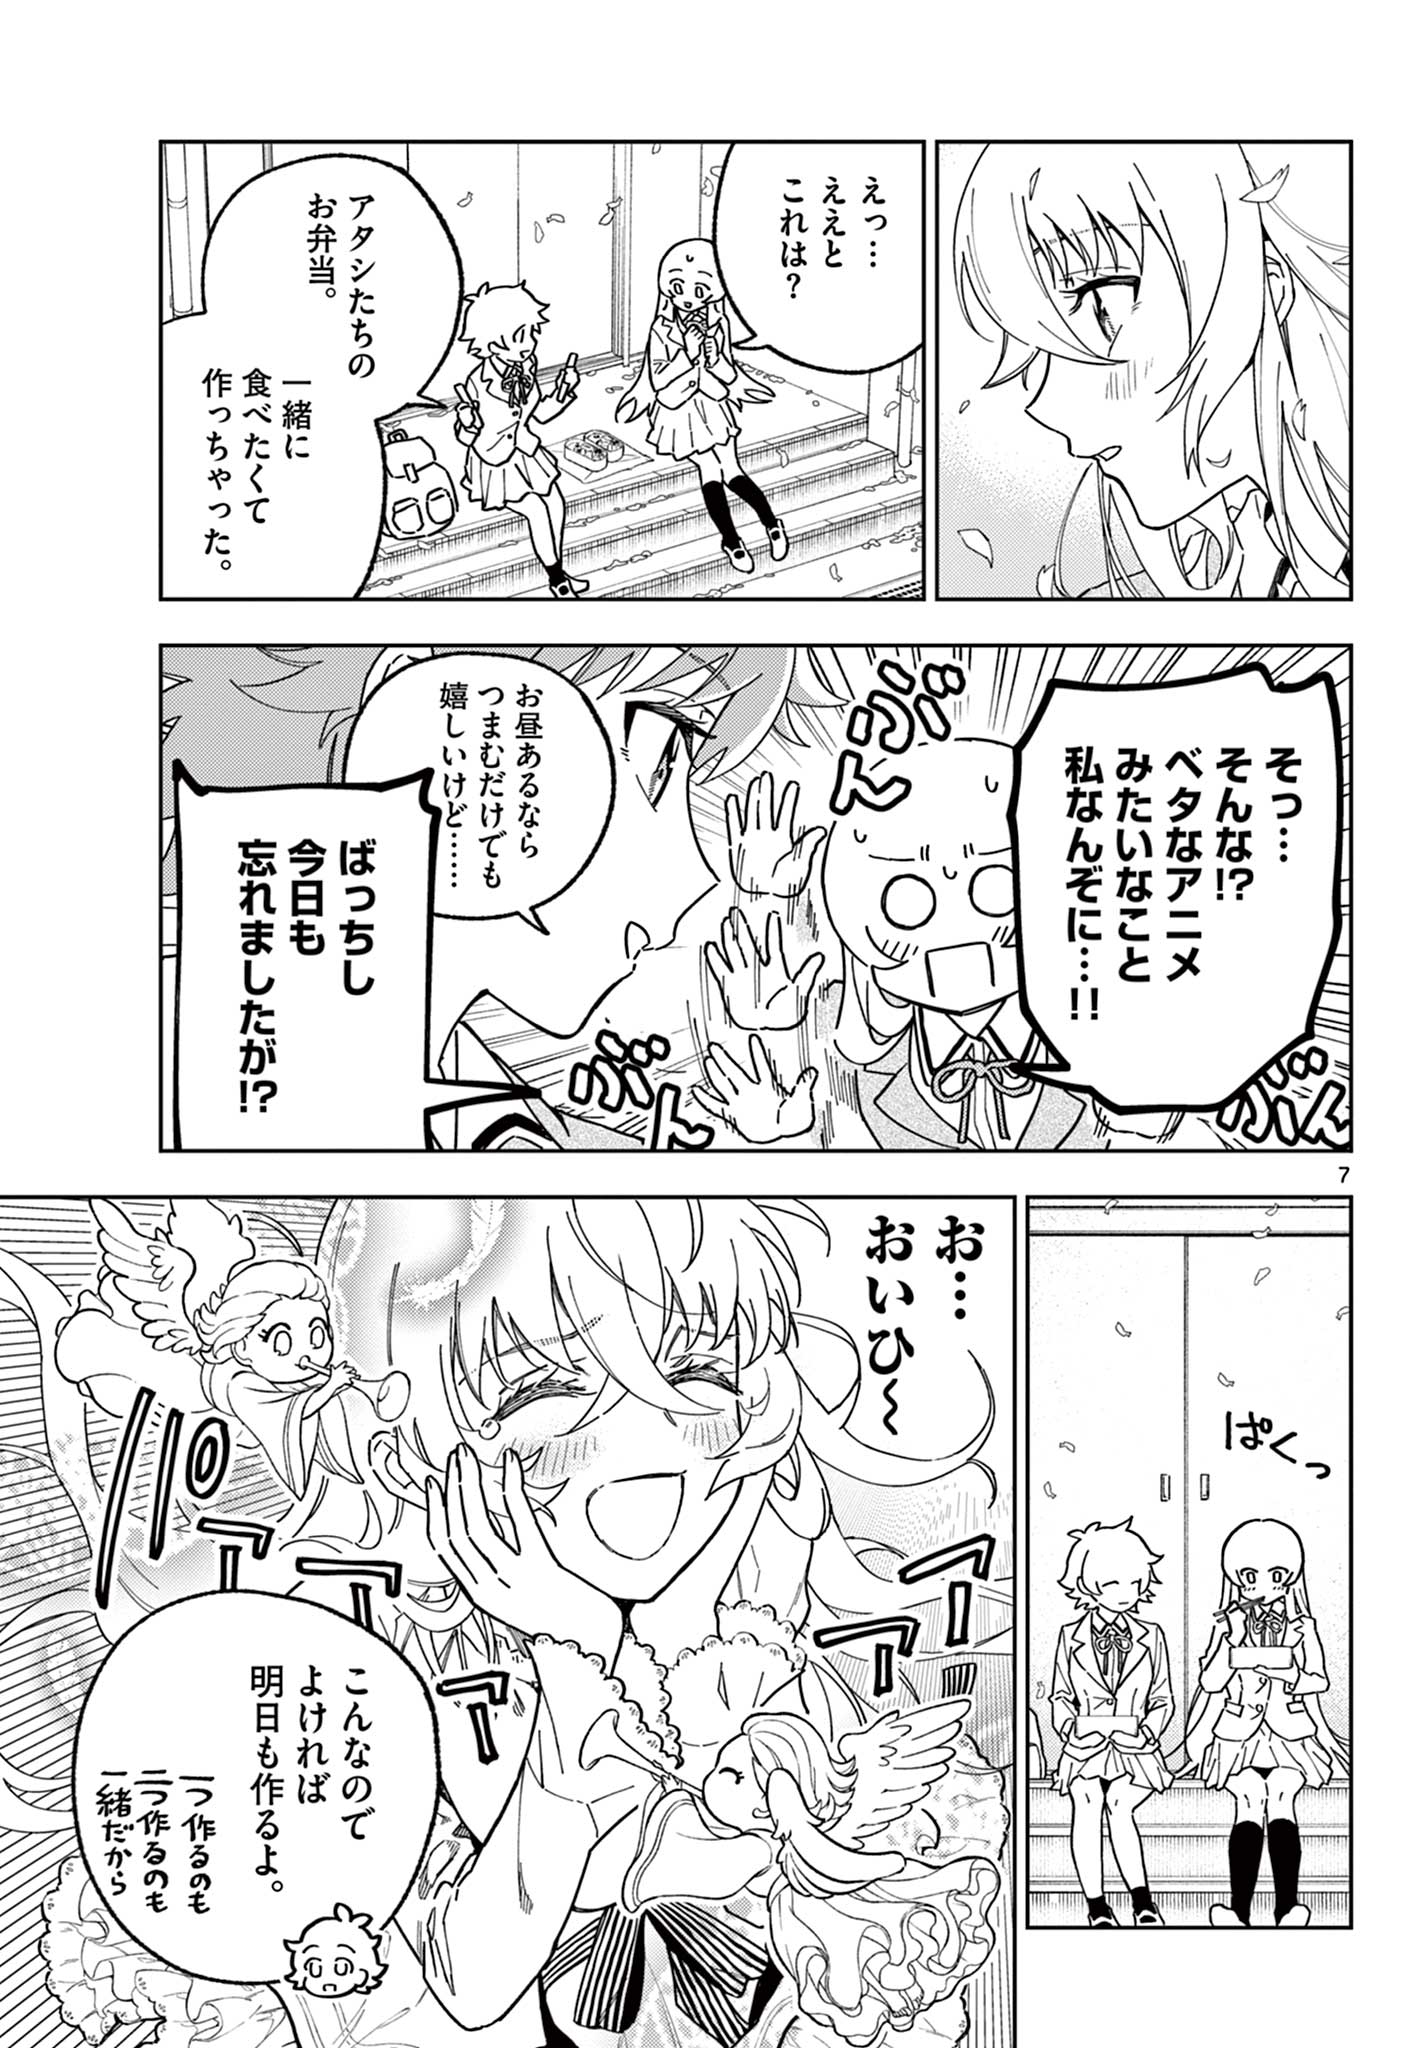 Gareki! Modeller Girls no Houkago - Chapter 4.2 - Page 7